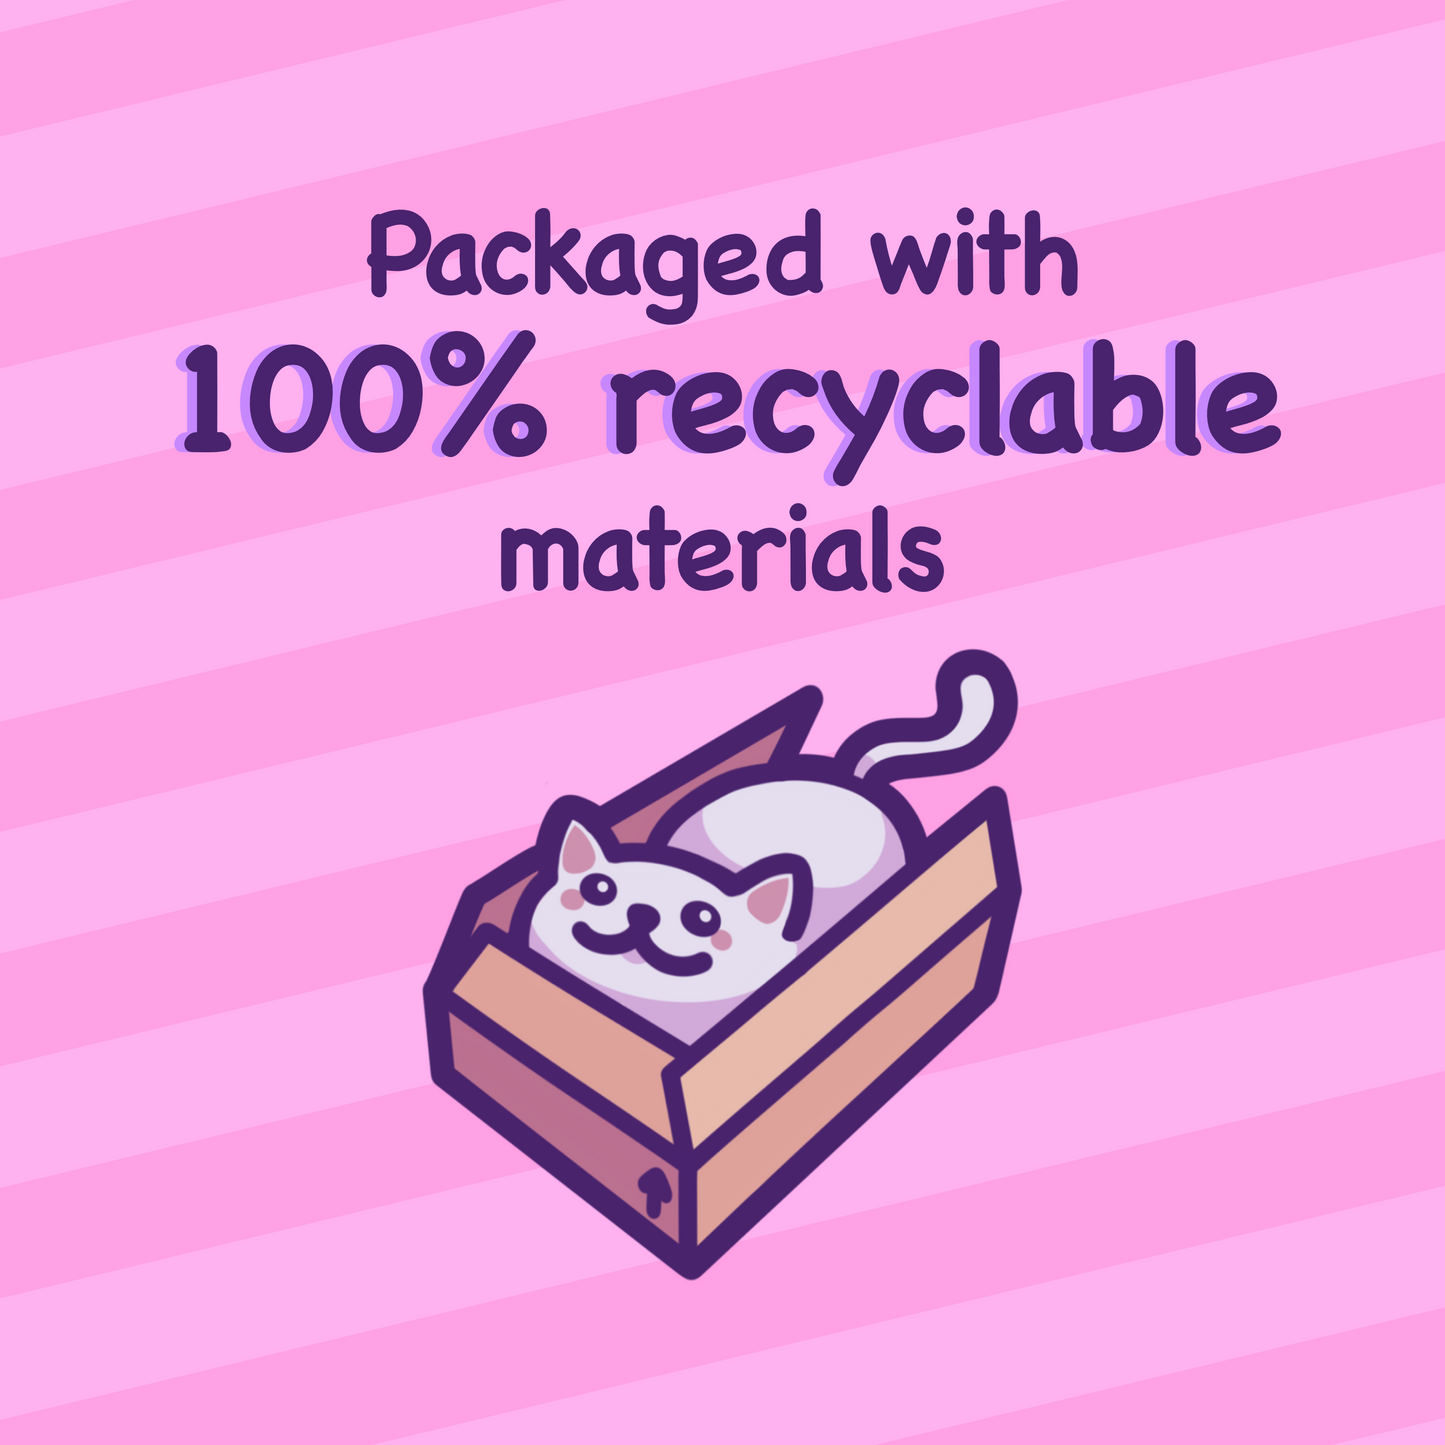 Cat in a Box Vinyl Sticker | Cute Cat Meme | Kawaii Waterproof Sticker for Water Bottle, Phone, Laptop, Bumper | Christmas Stocking Filler